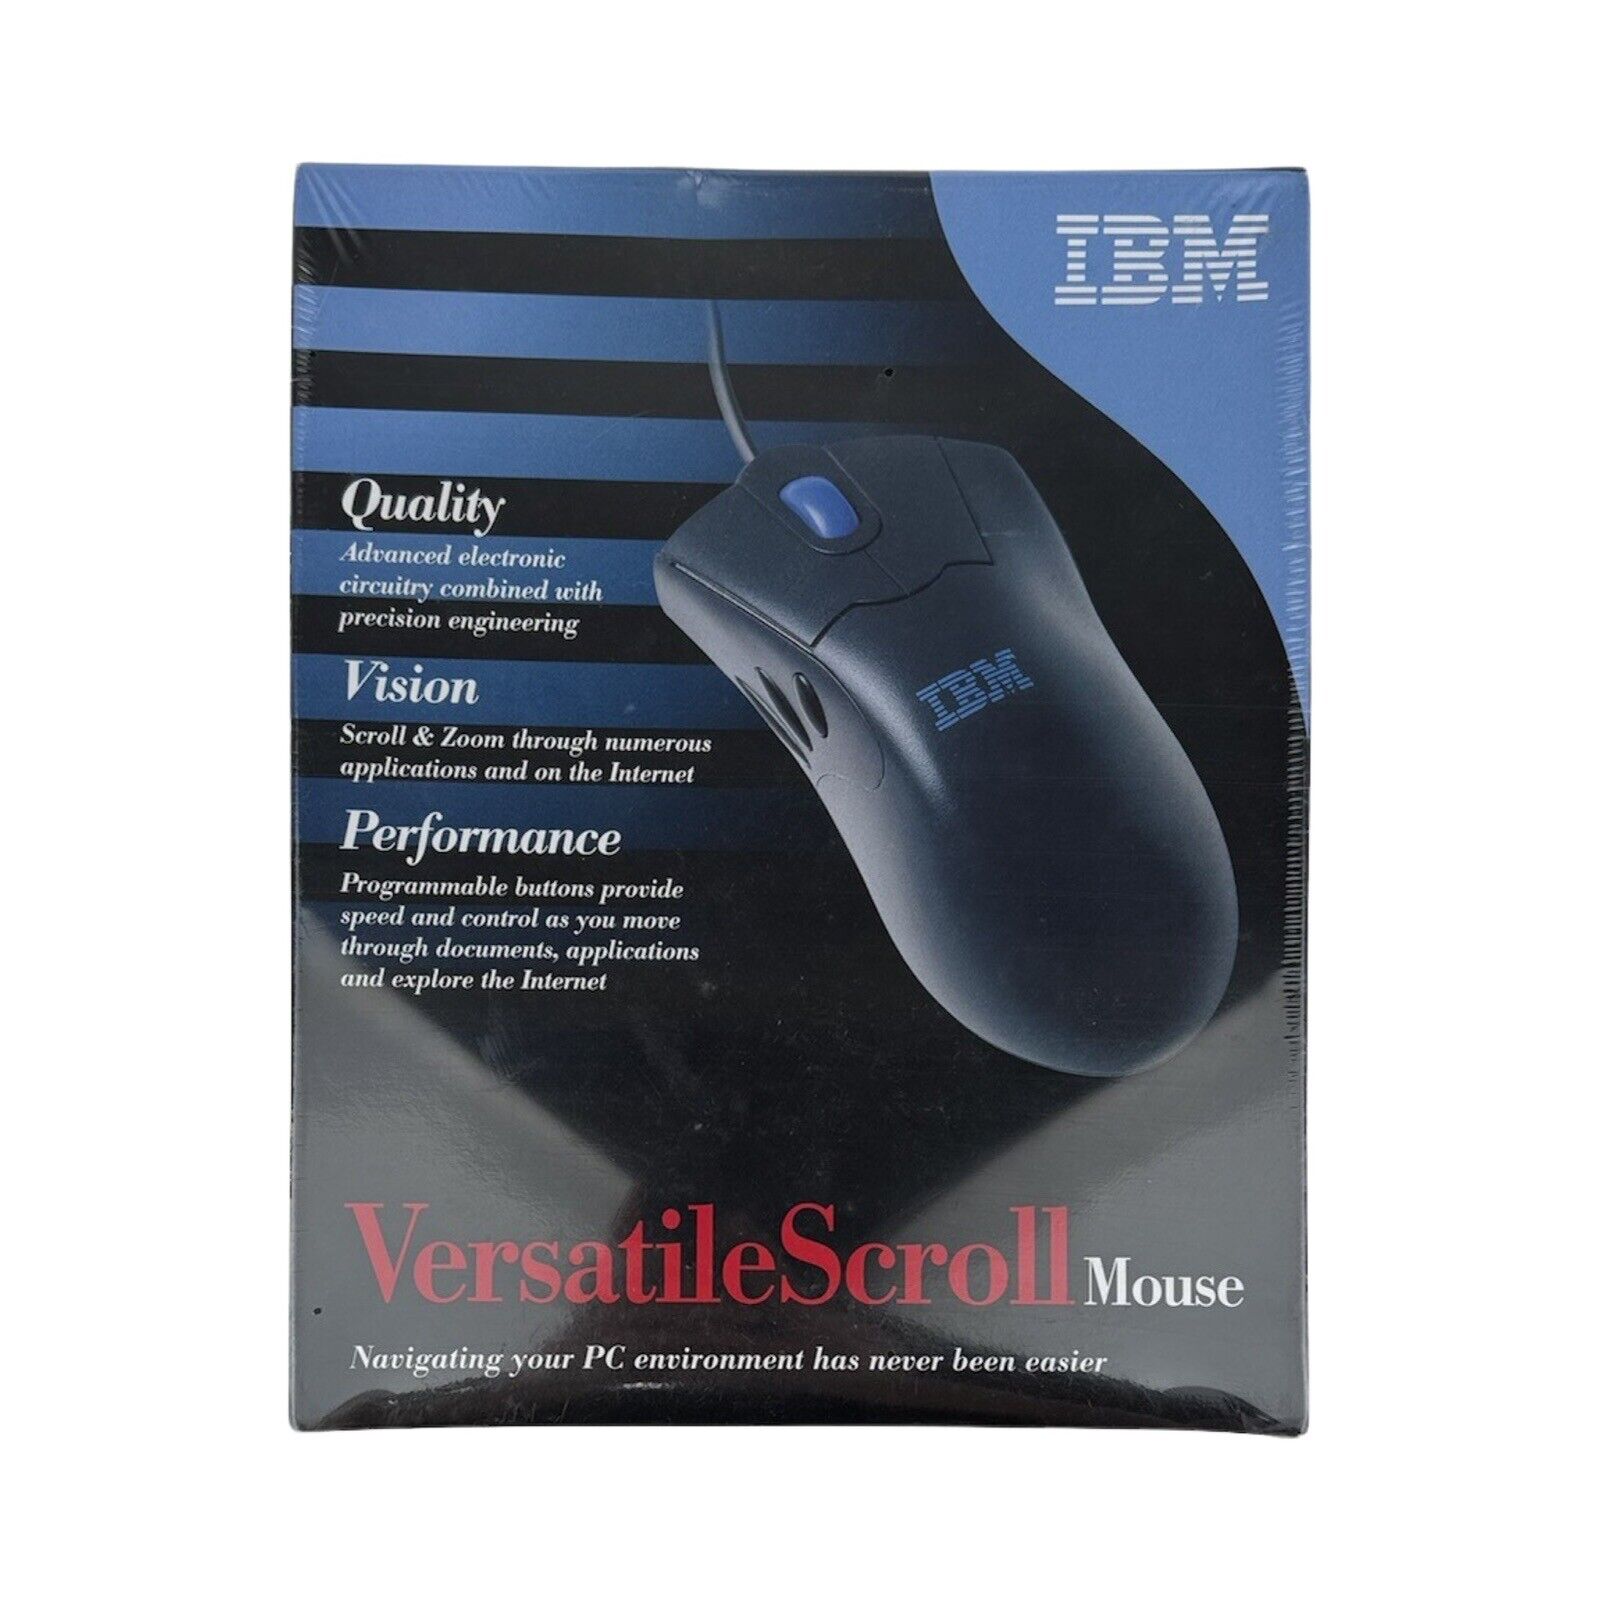 Vintage IBM Versatile Scroll Mouse PS2 Wired (09N5513) - Sealed